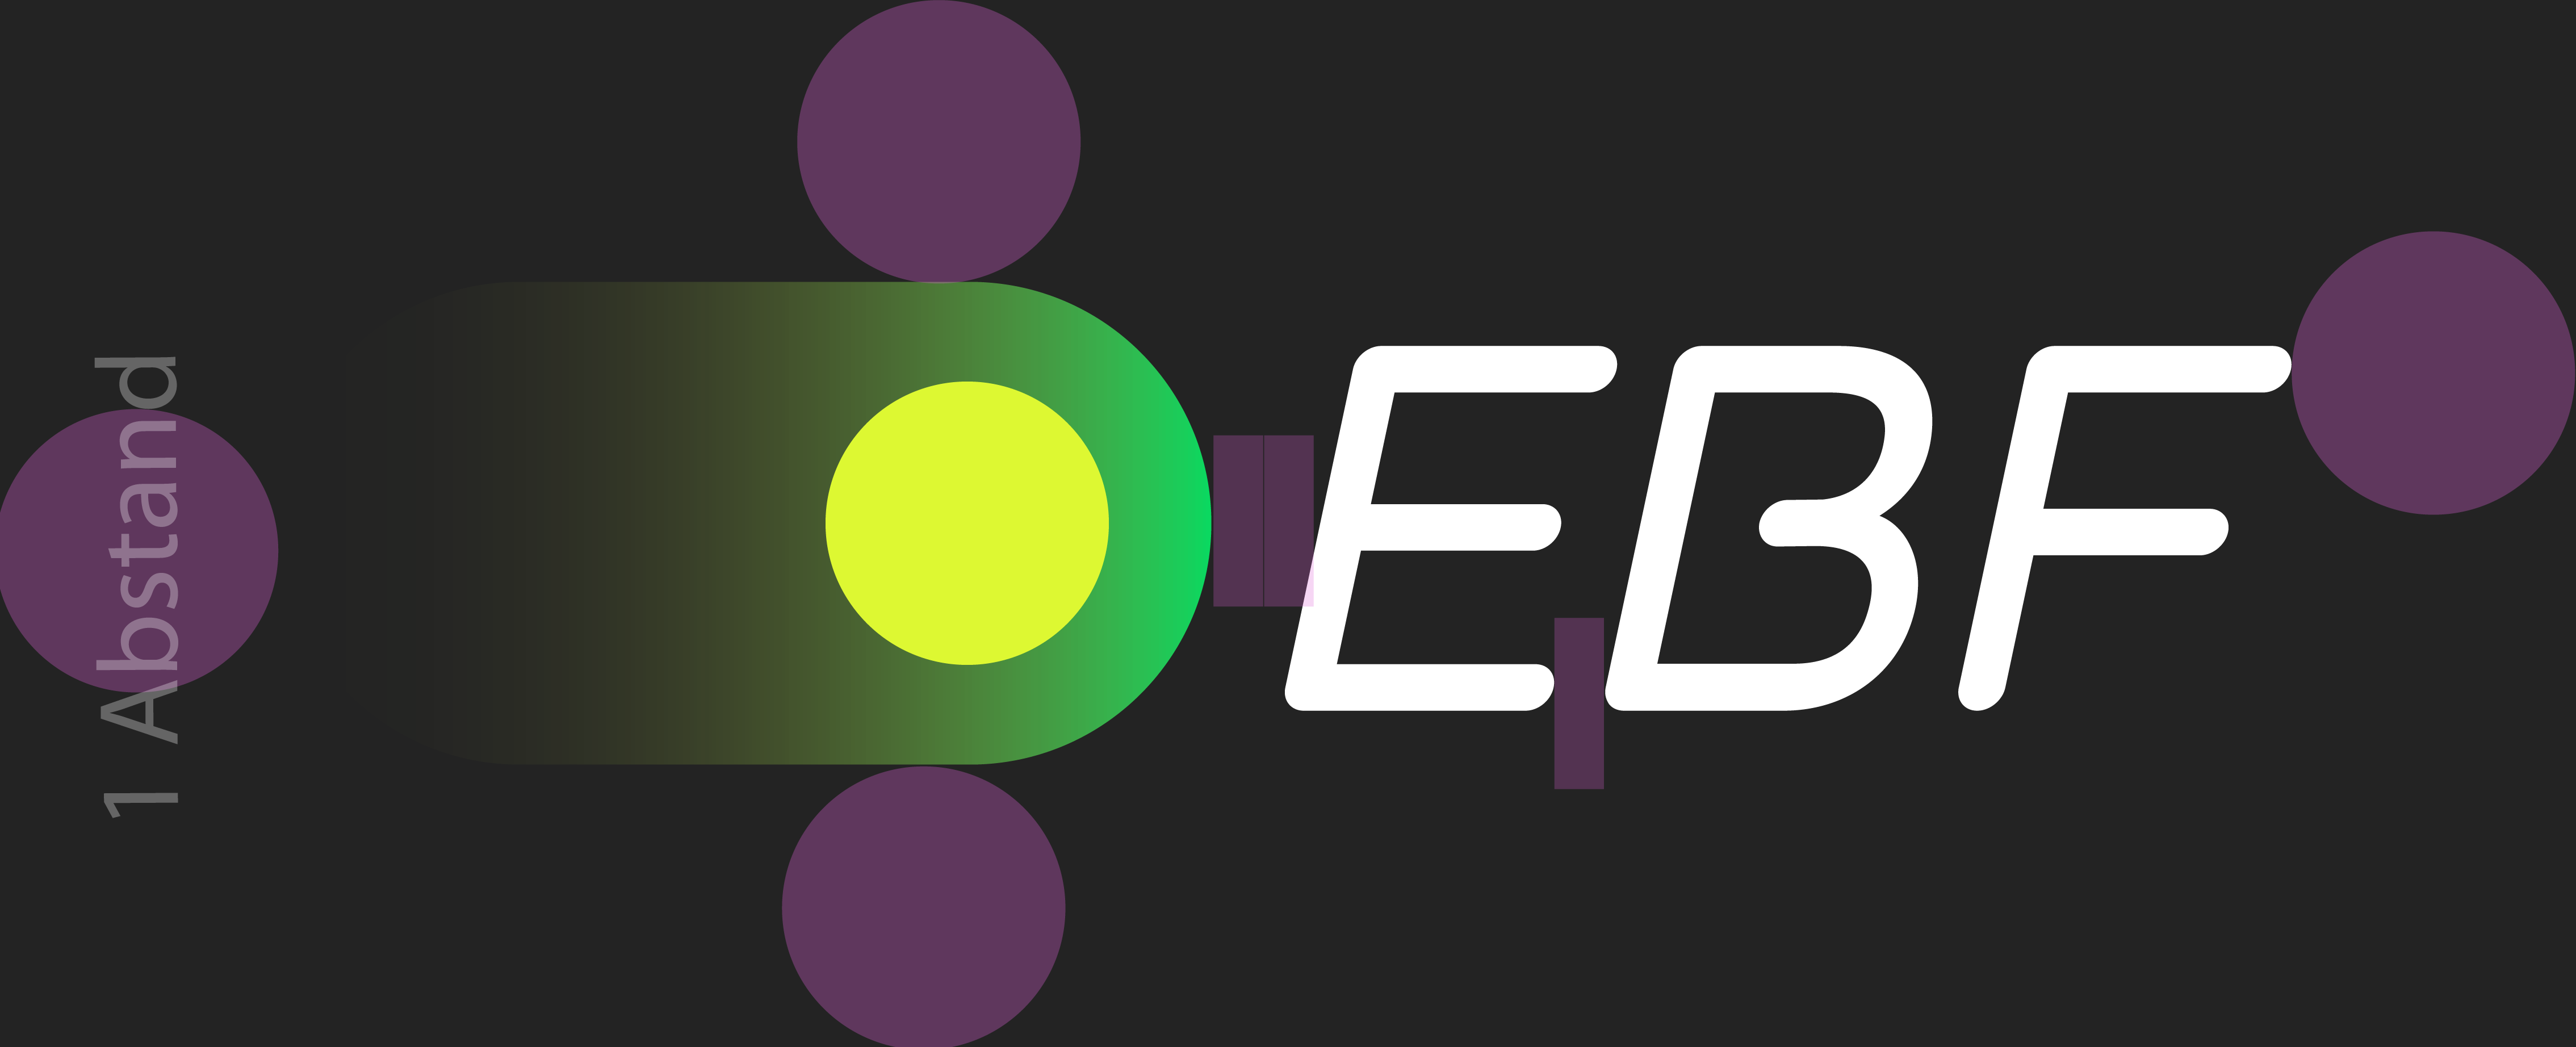 ebf-logo-rgb_dark-vermassung.png